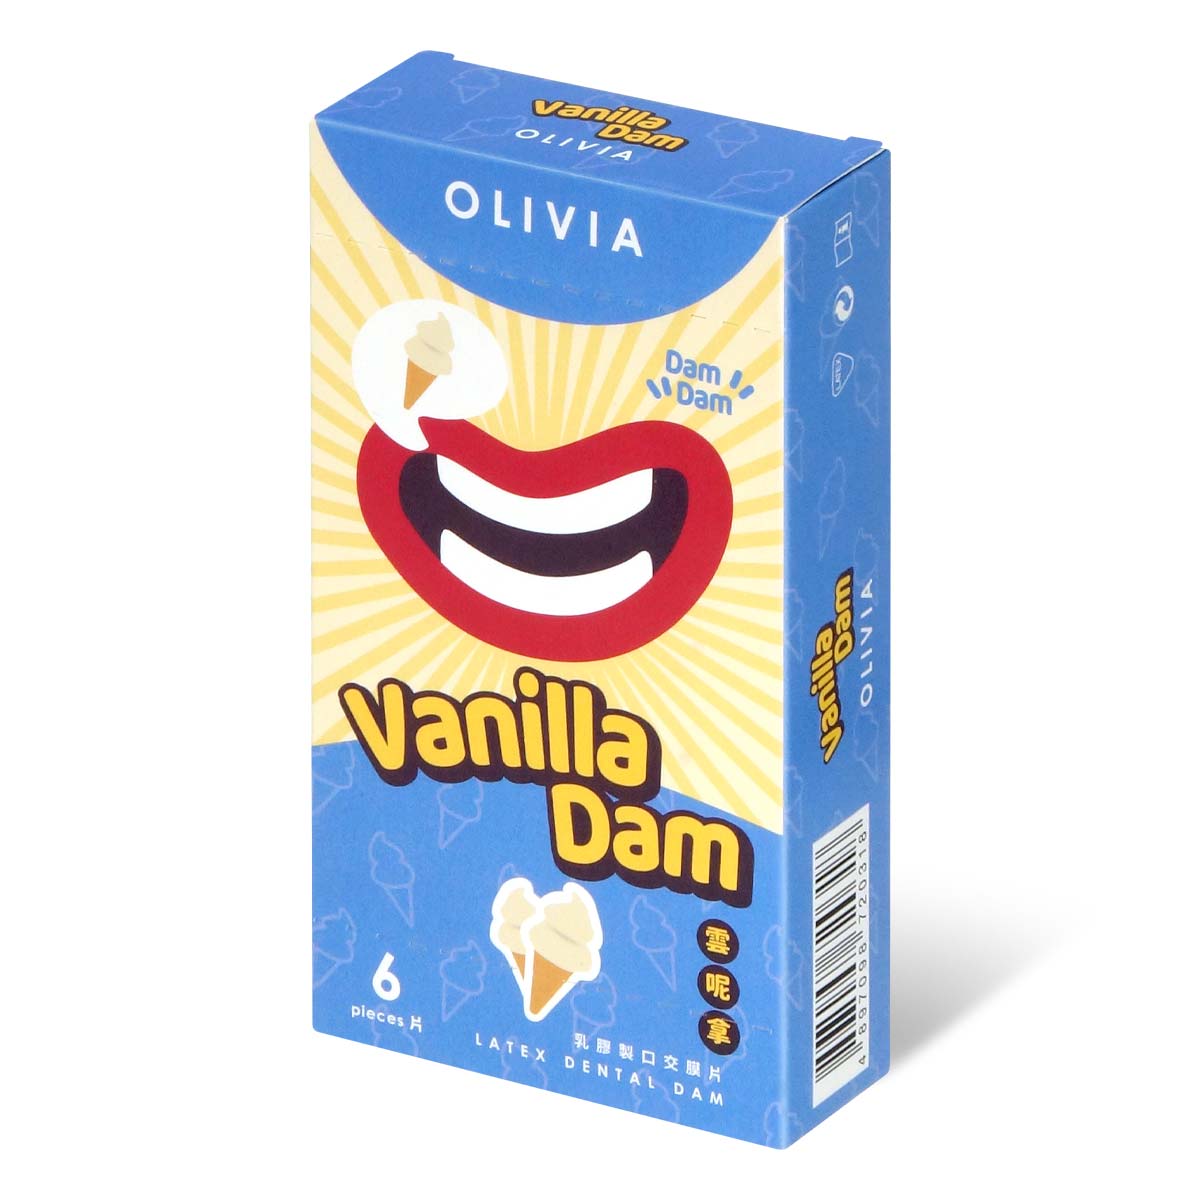 Olivia Vanilla Scent 6's Pack Latex Dental Dam-p_1